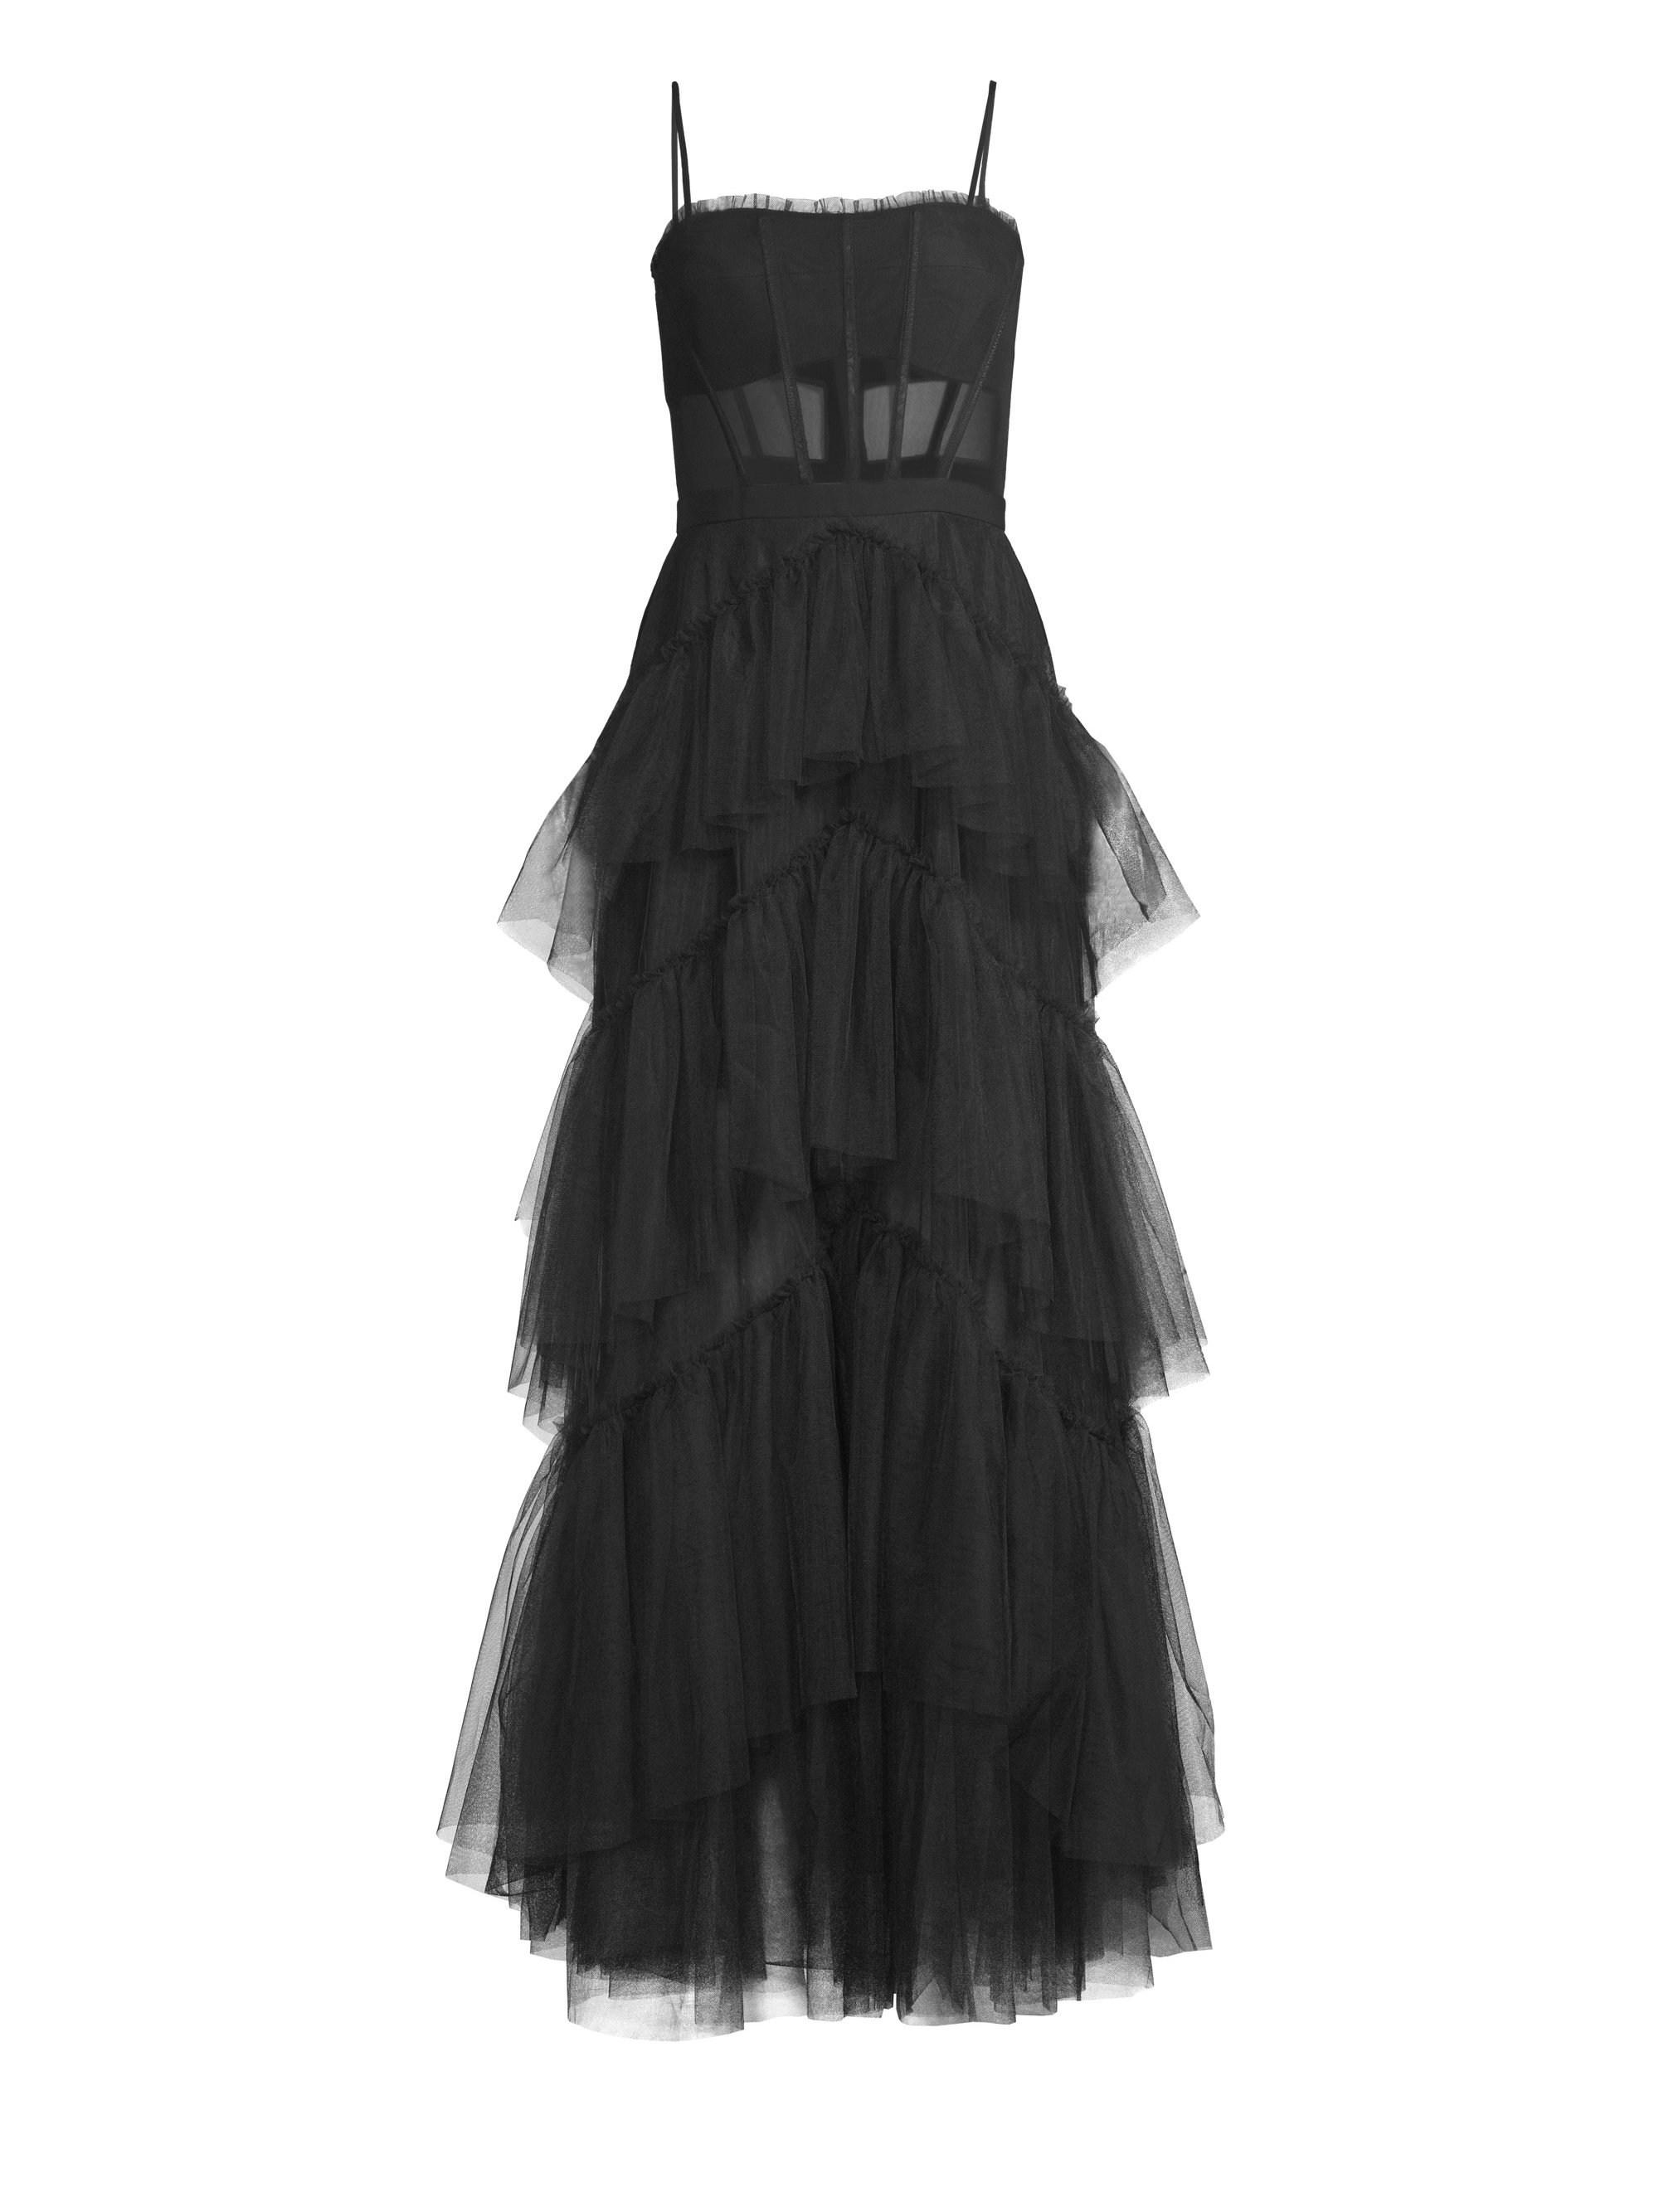 Lyst - BCBGMAXAZRIA Layered Tulle & Mesh Sleeveless Corset Gown in Black